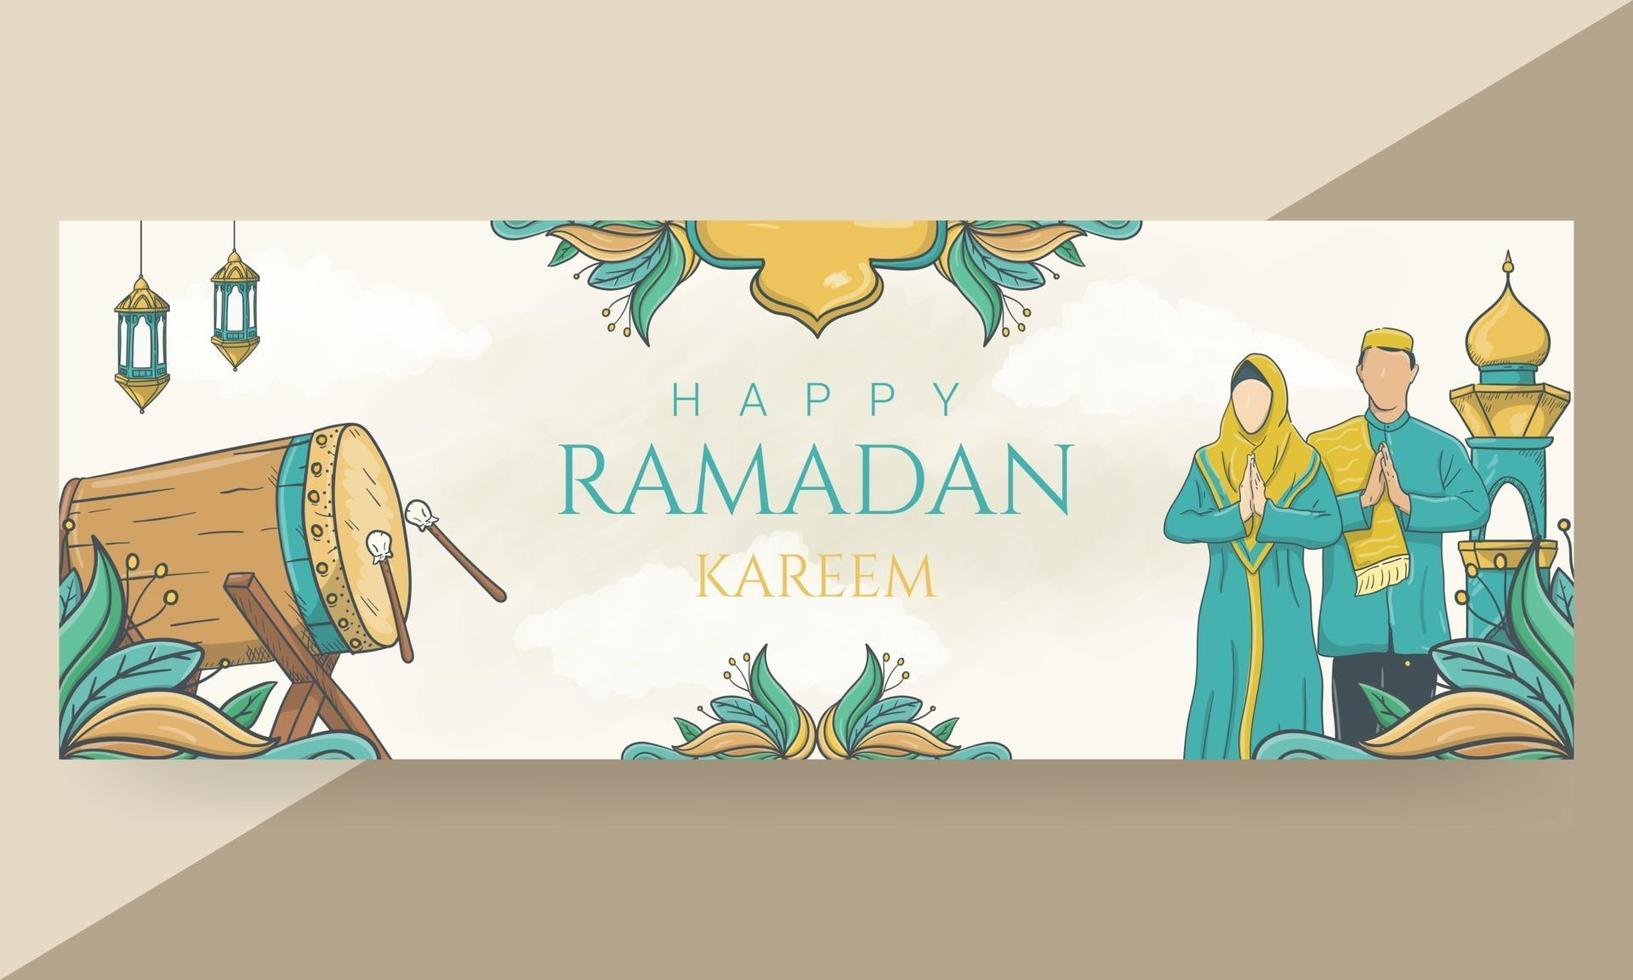 desenhado à mão banner kareem feliz ramadan vetor